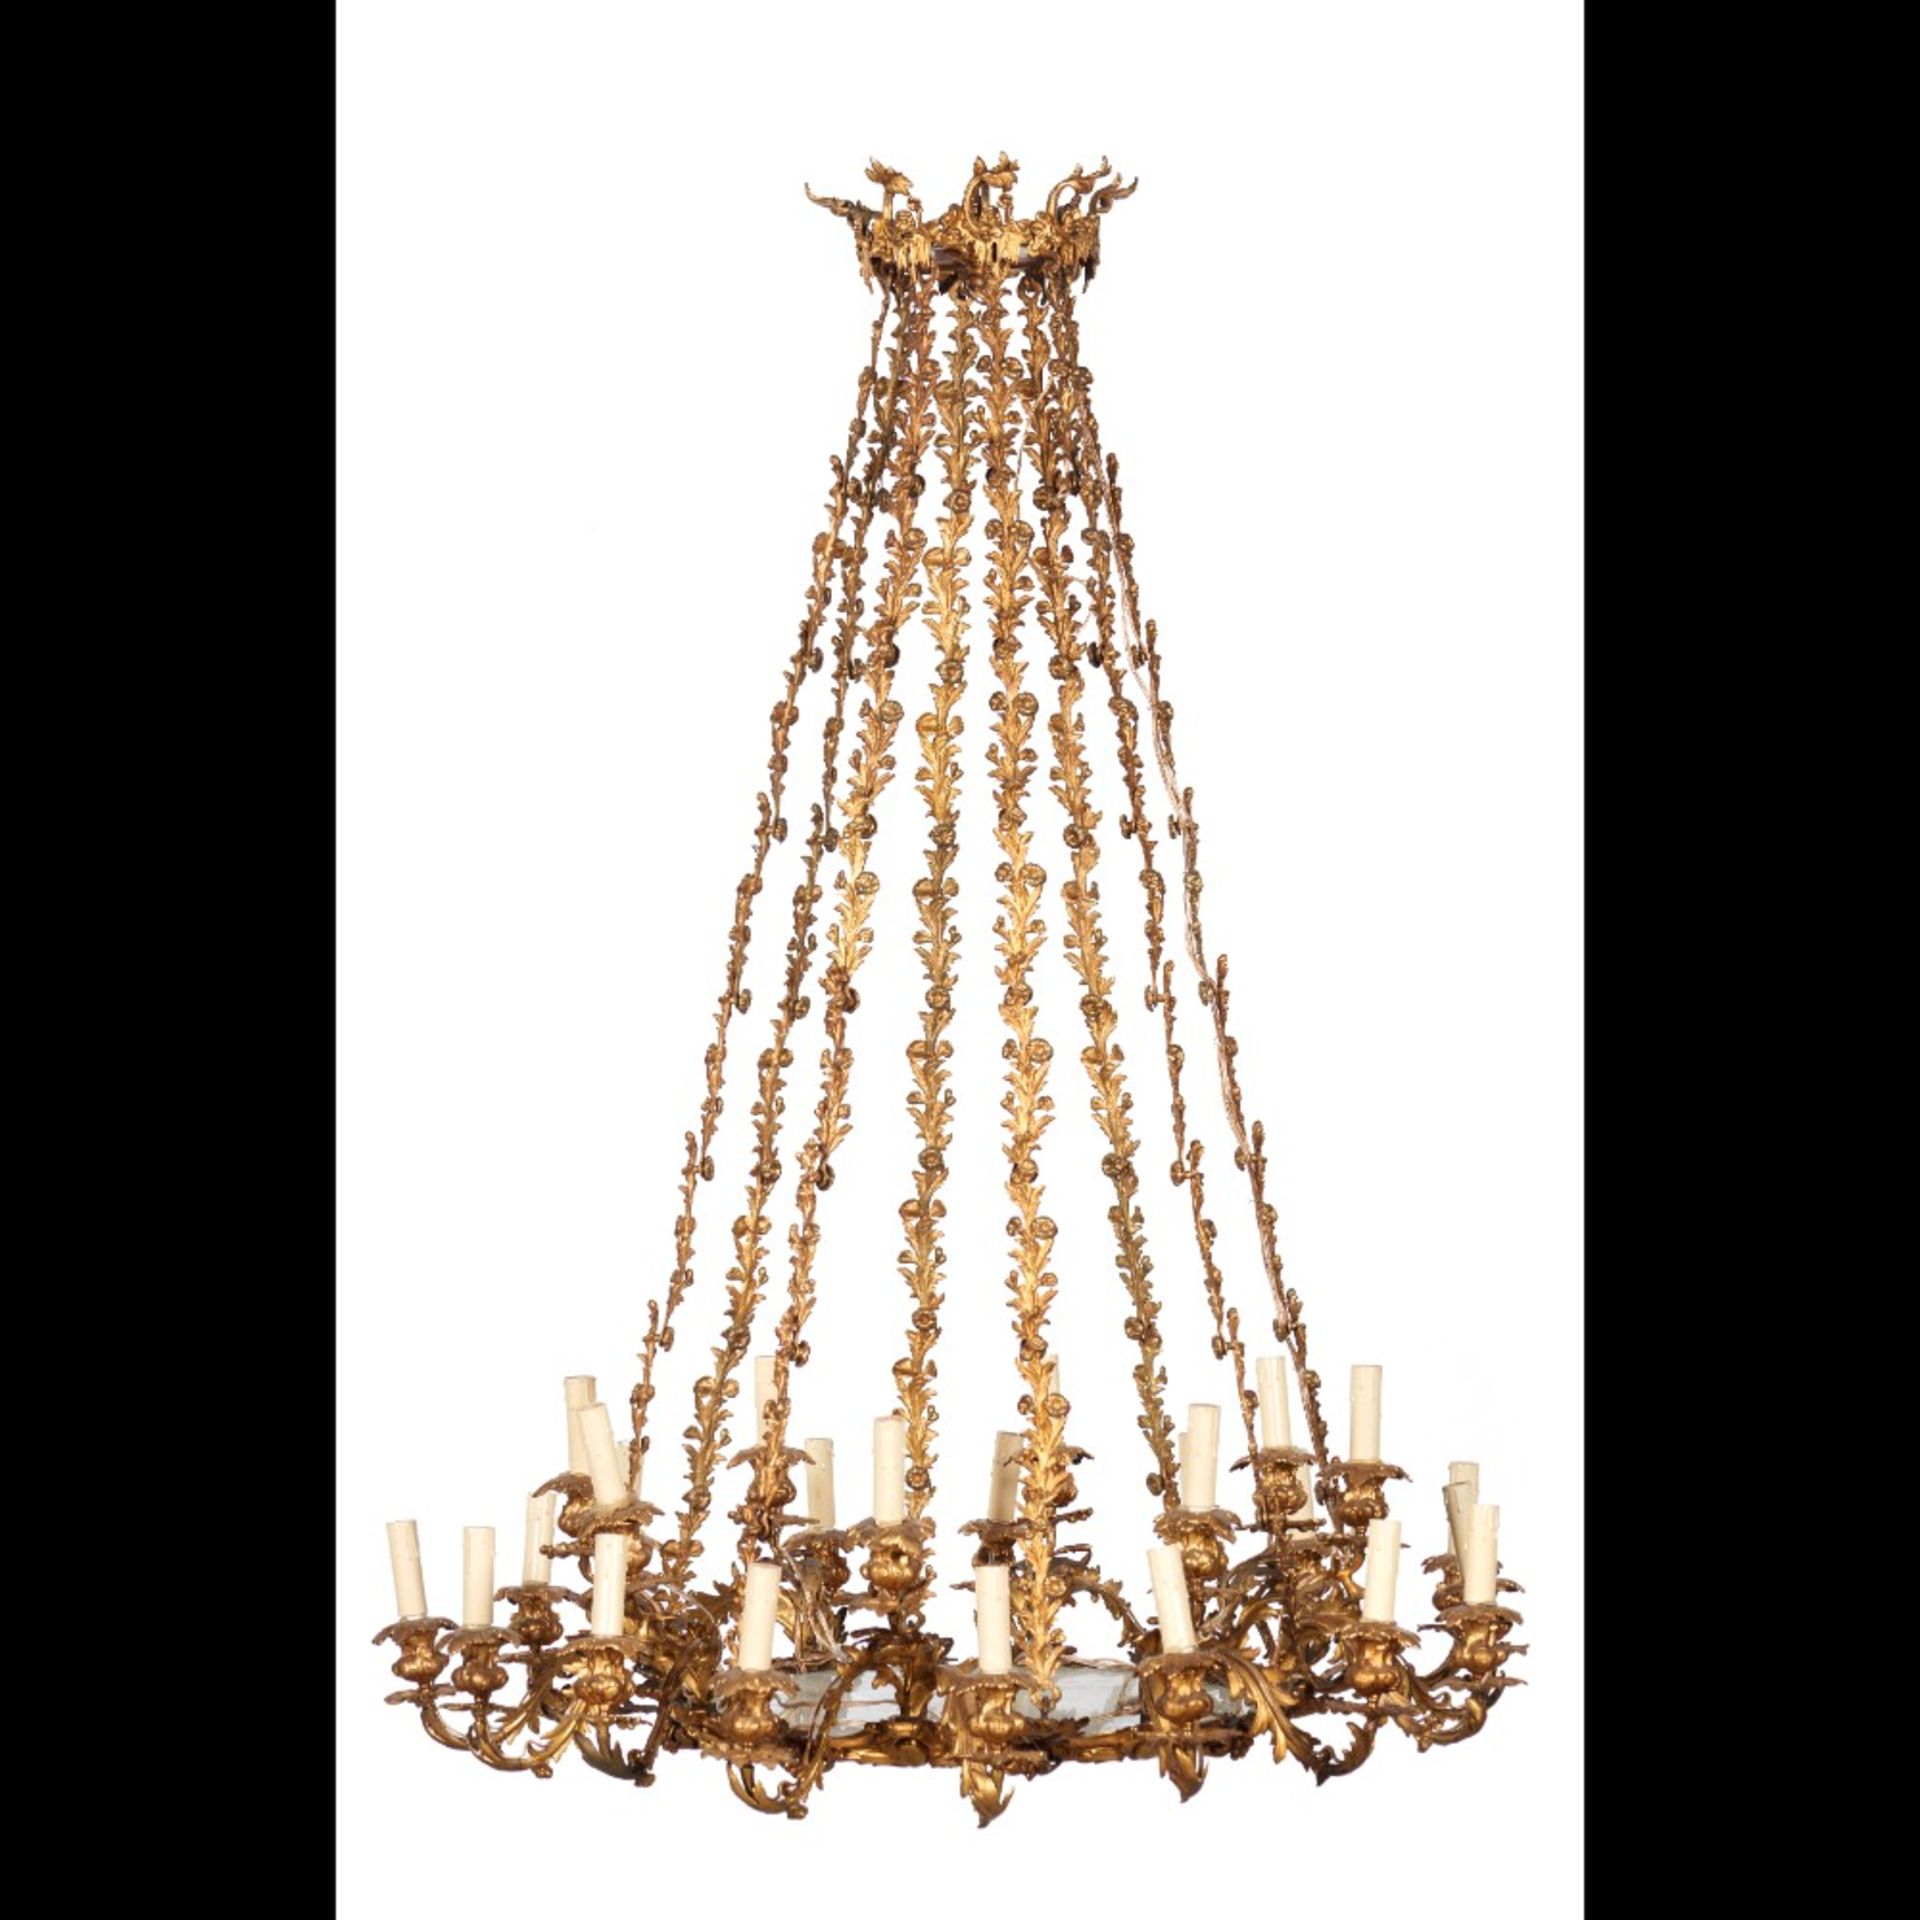  A large Victorian twenty-four branch chandelier